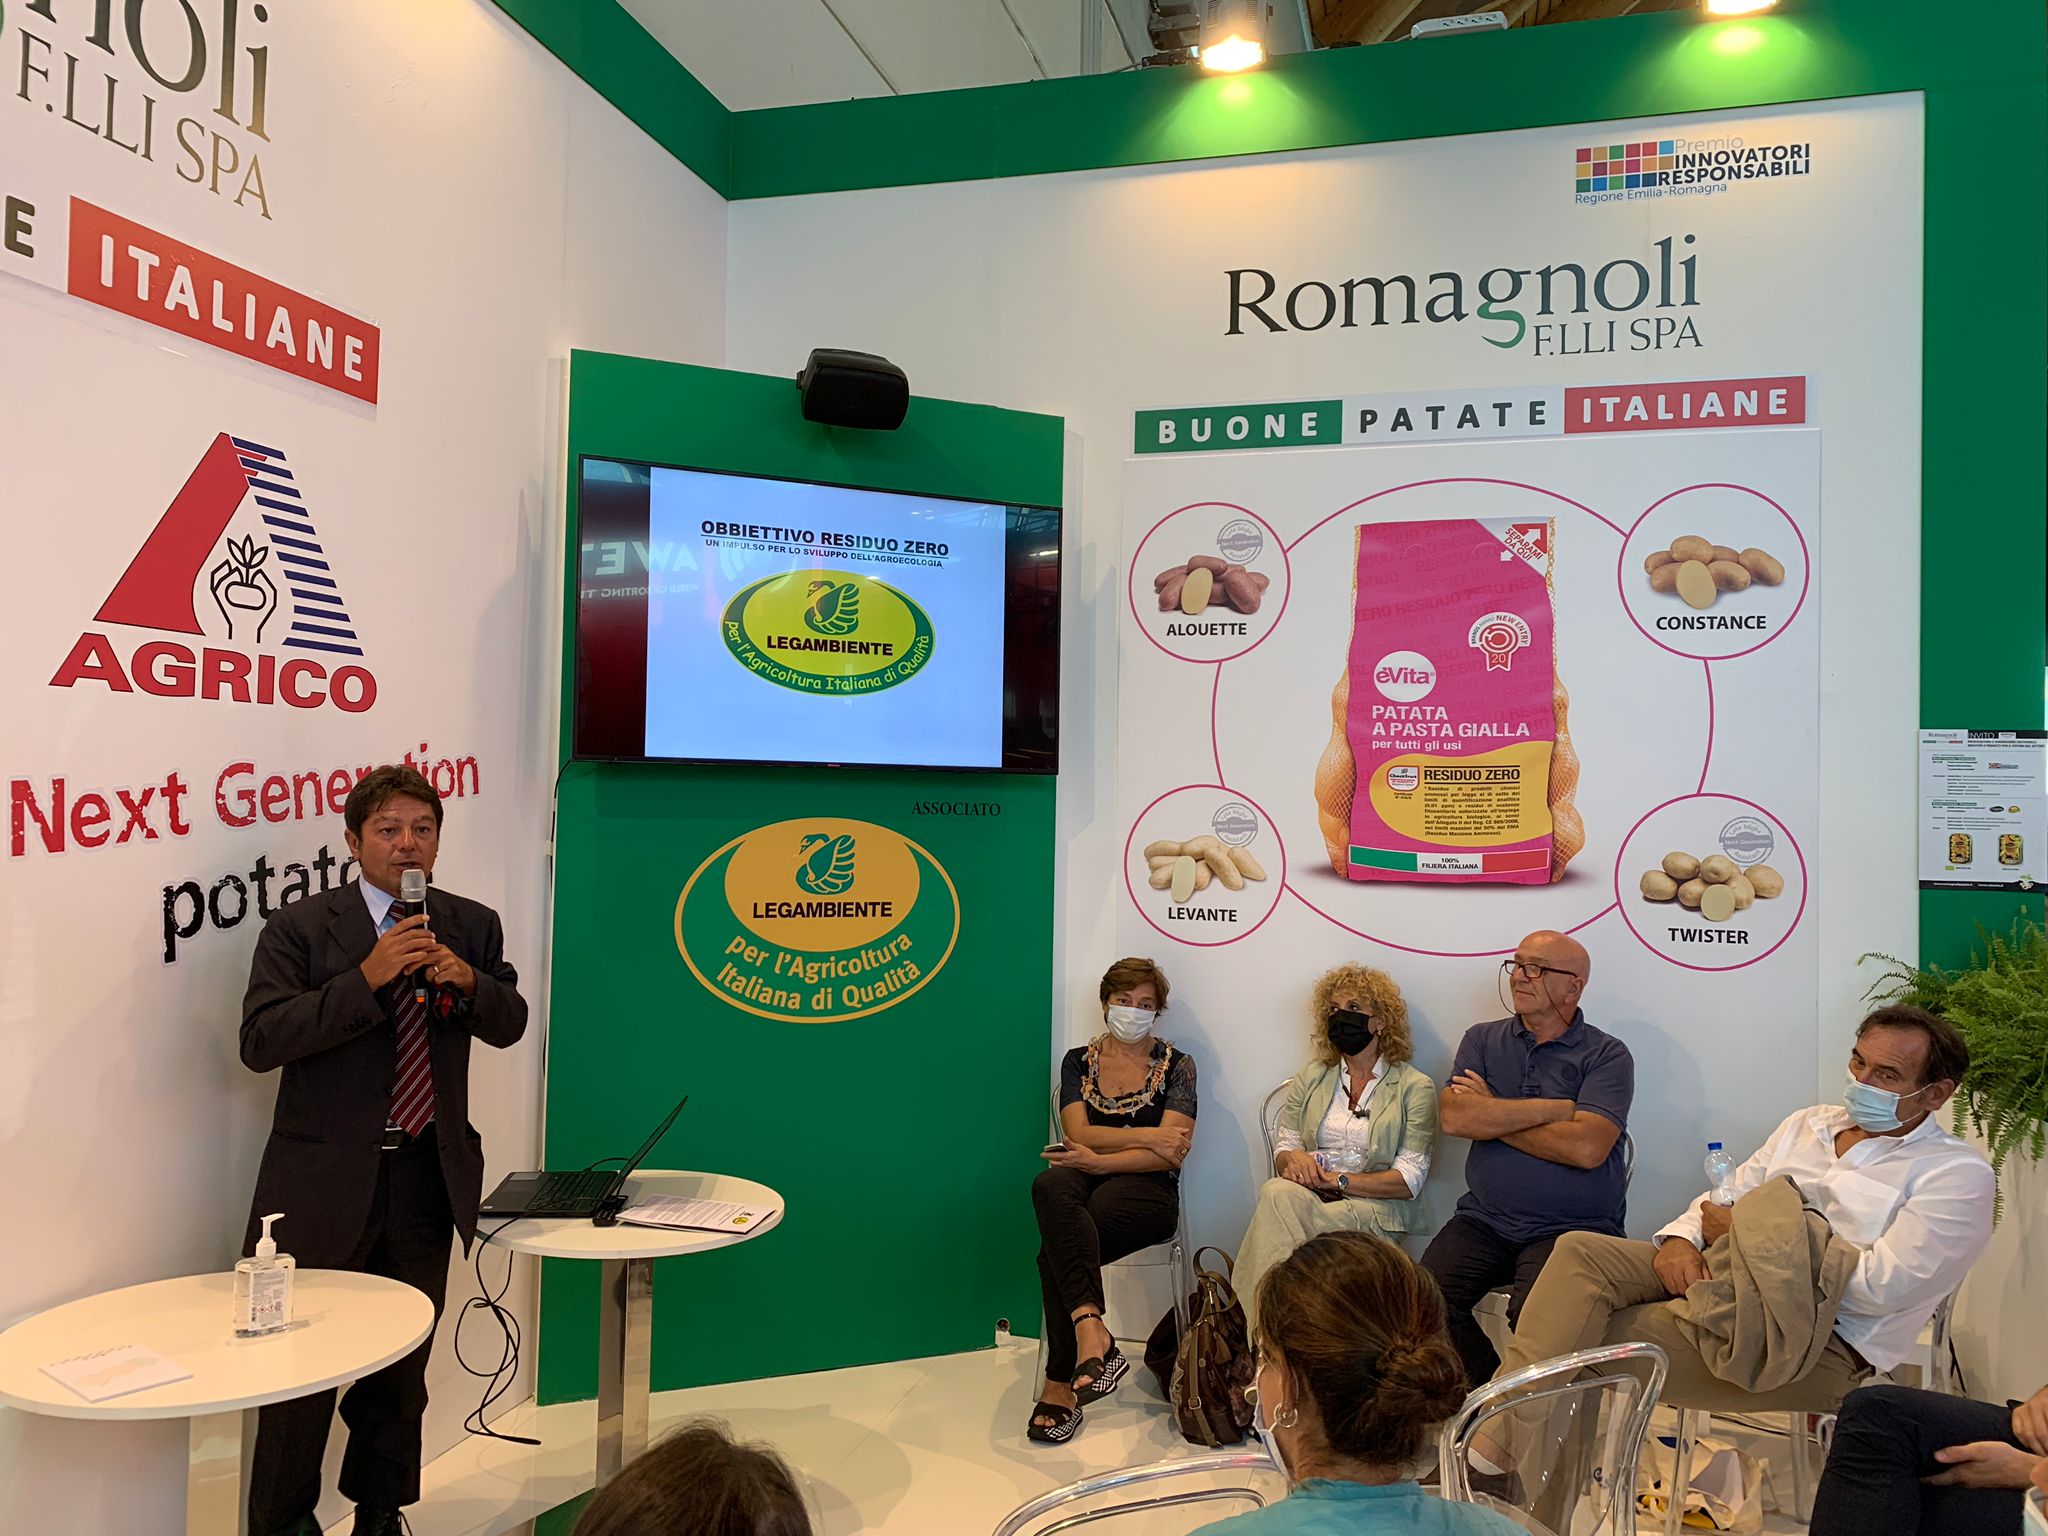 Macfrut: Romagnoli F.lli for Italian potato-growing all about sustainable innovation